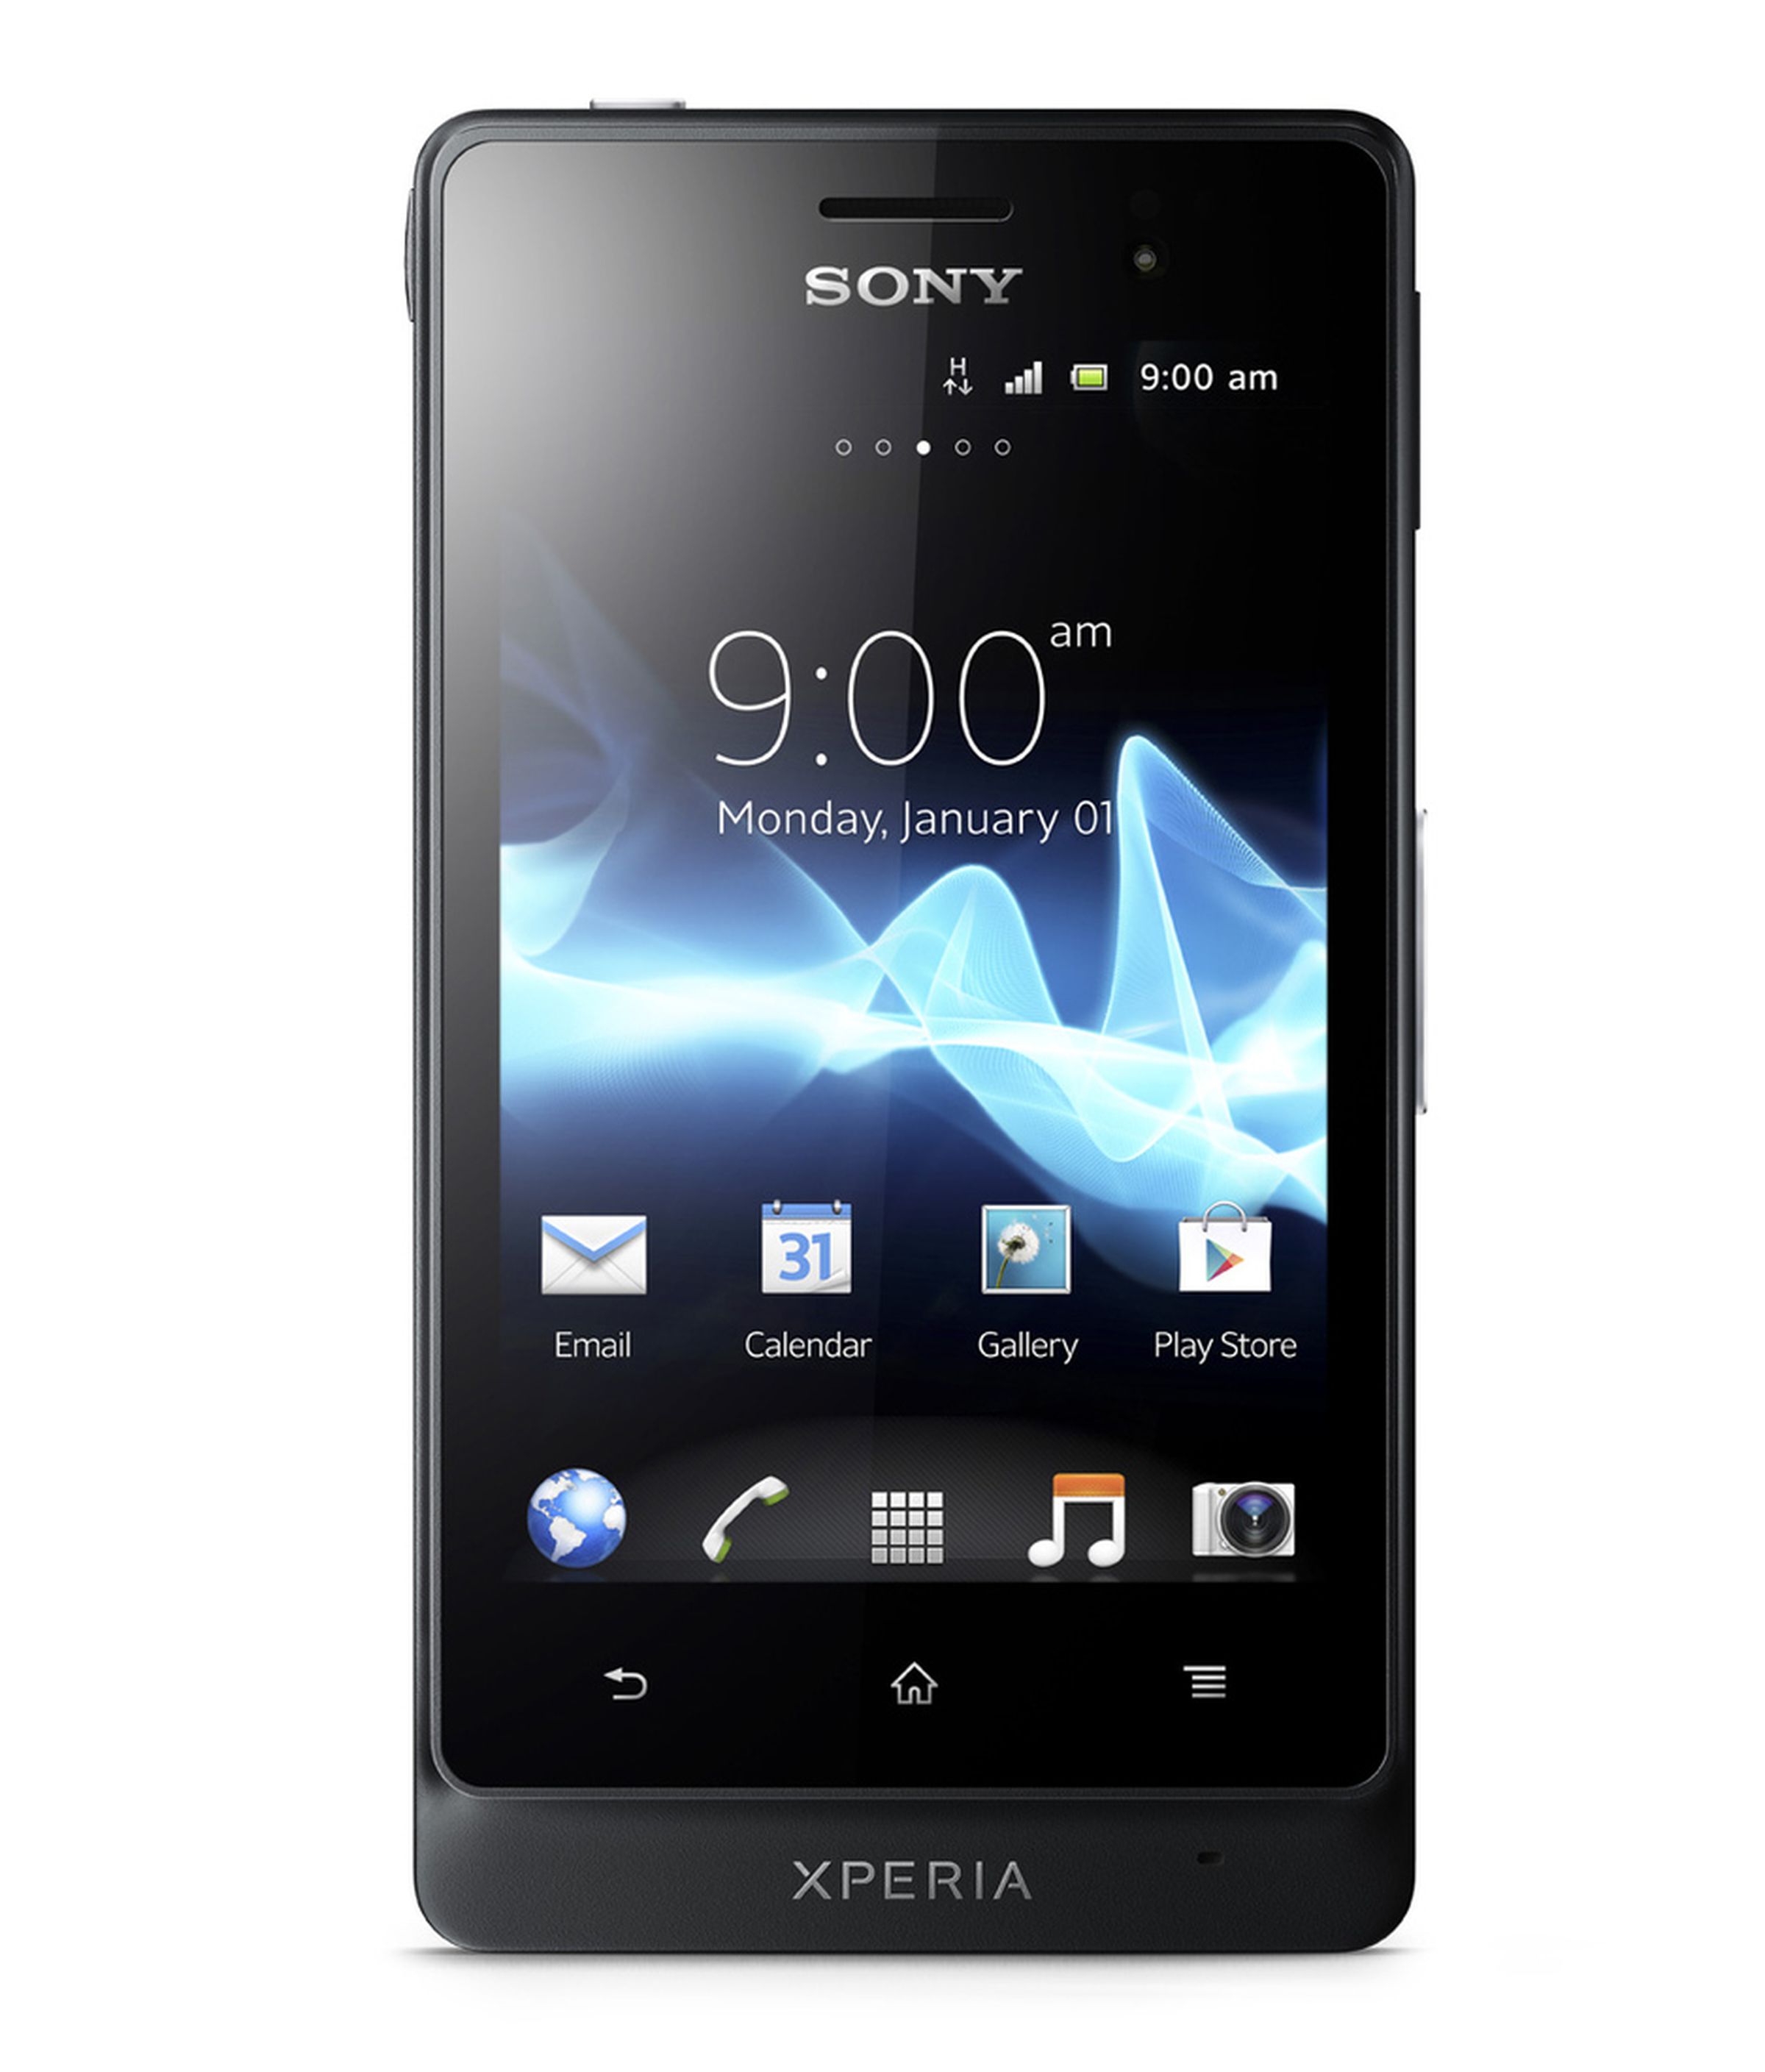 Sony Xperia Go and Xperia Acro S press photos